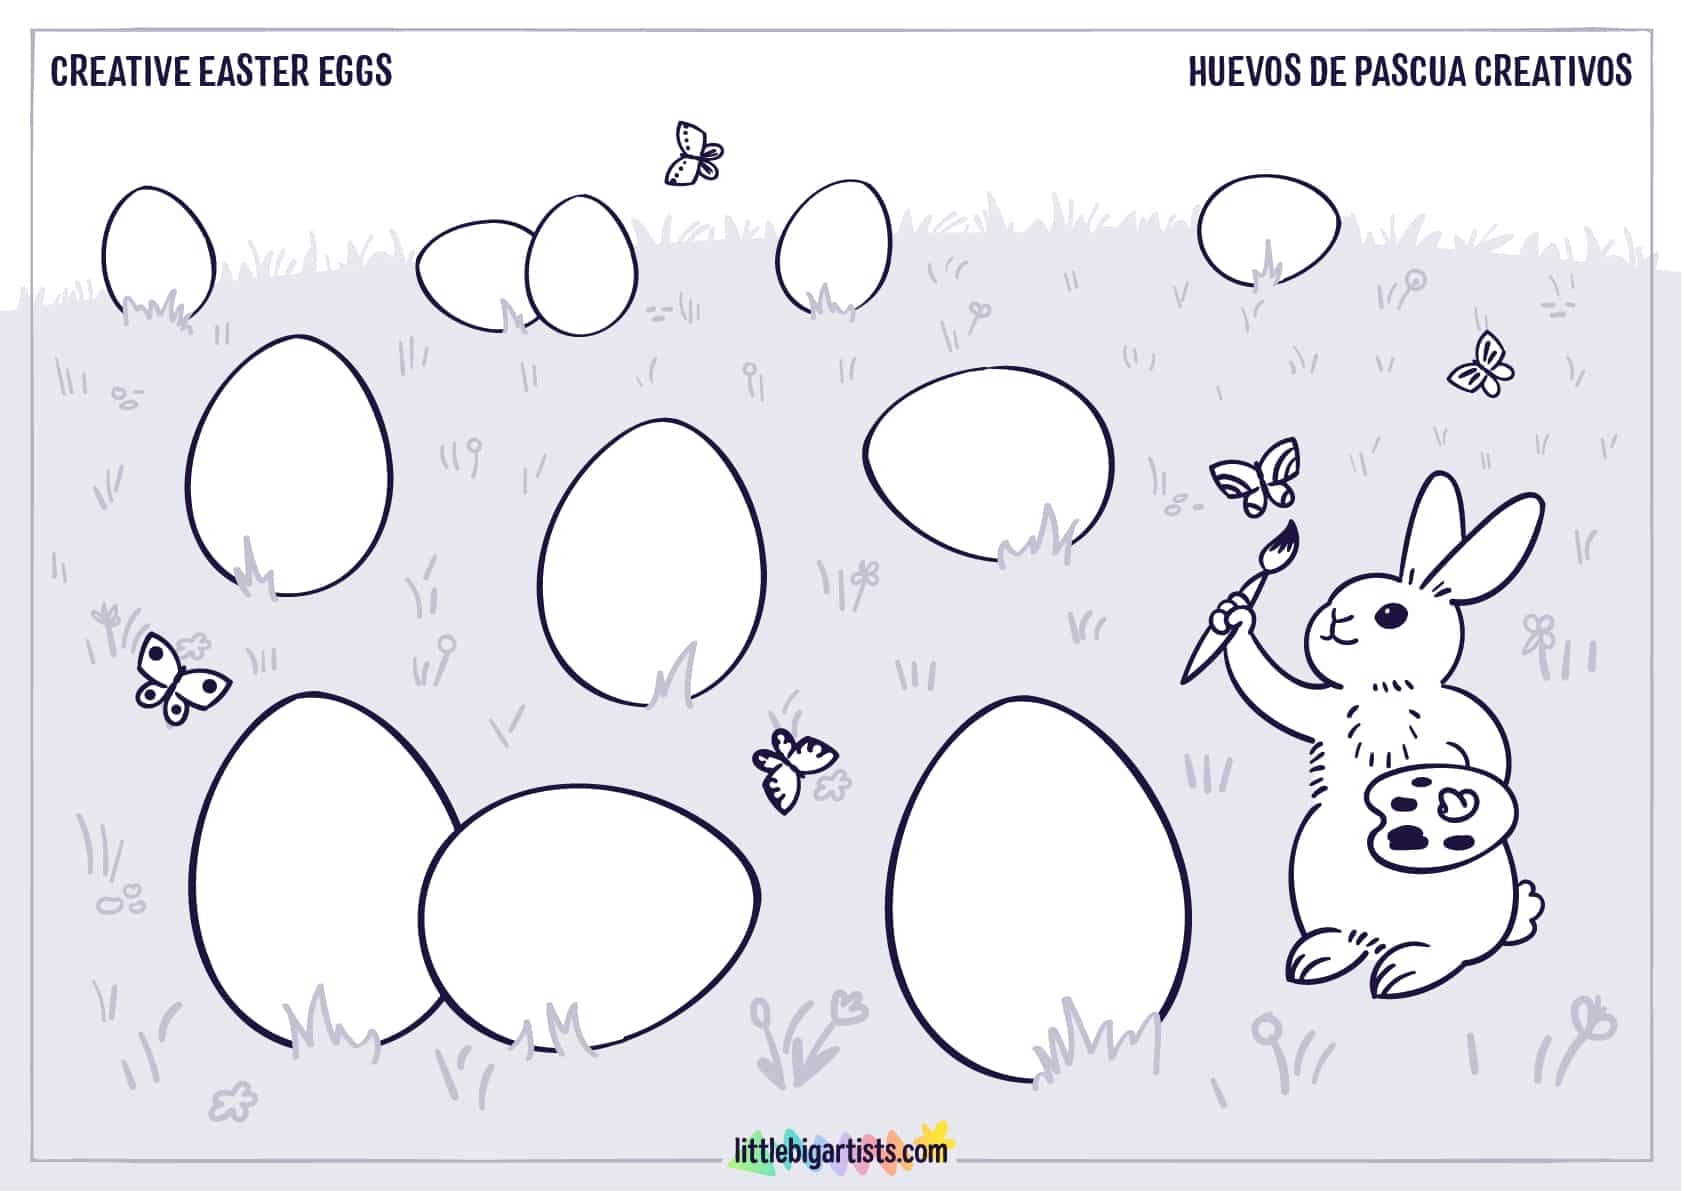 Creative Easter Eggs